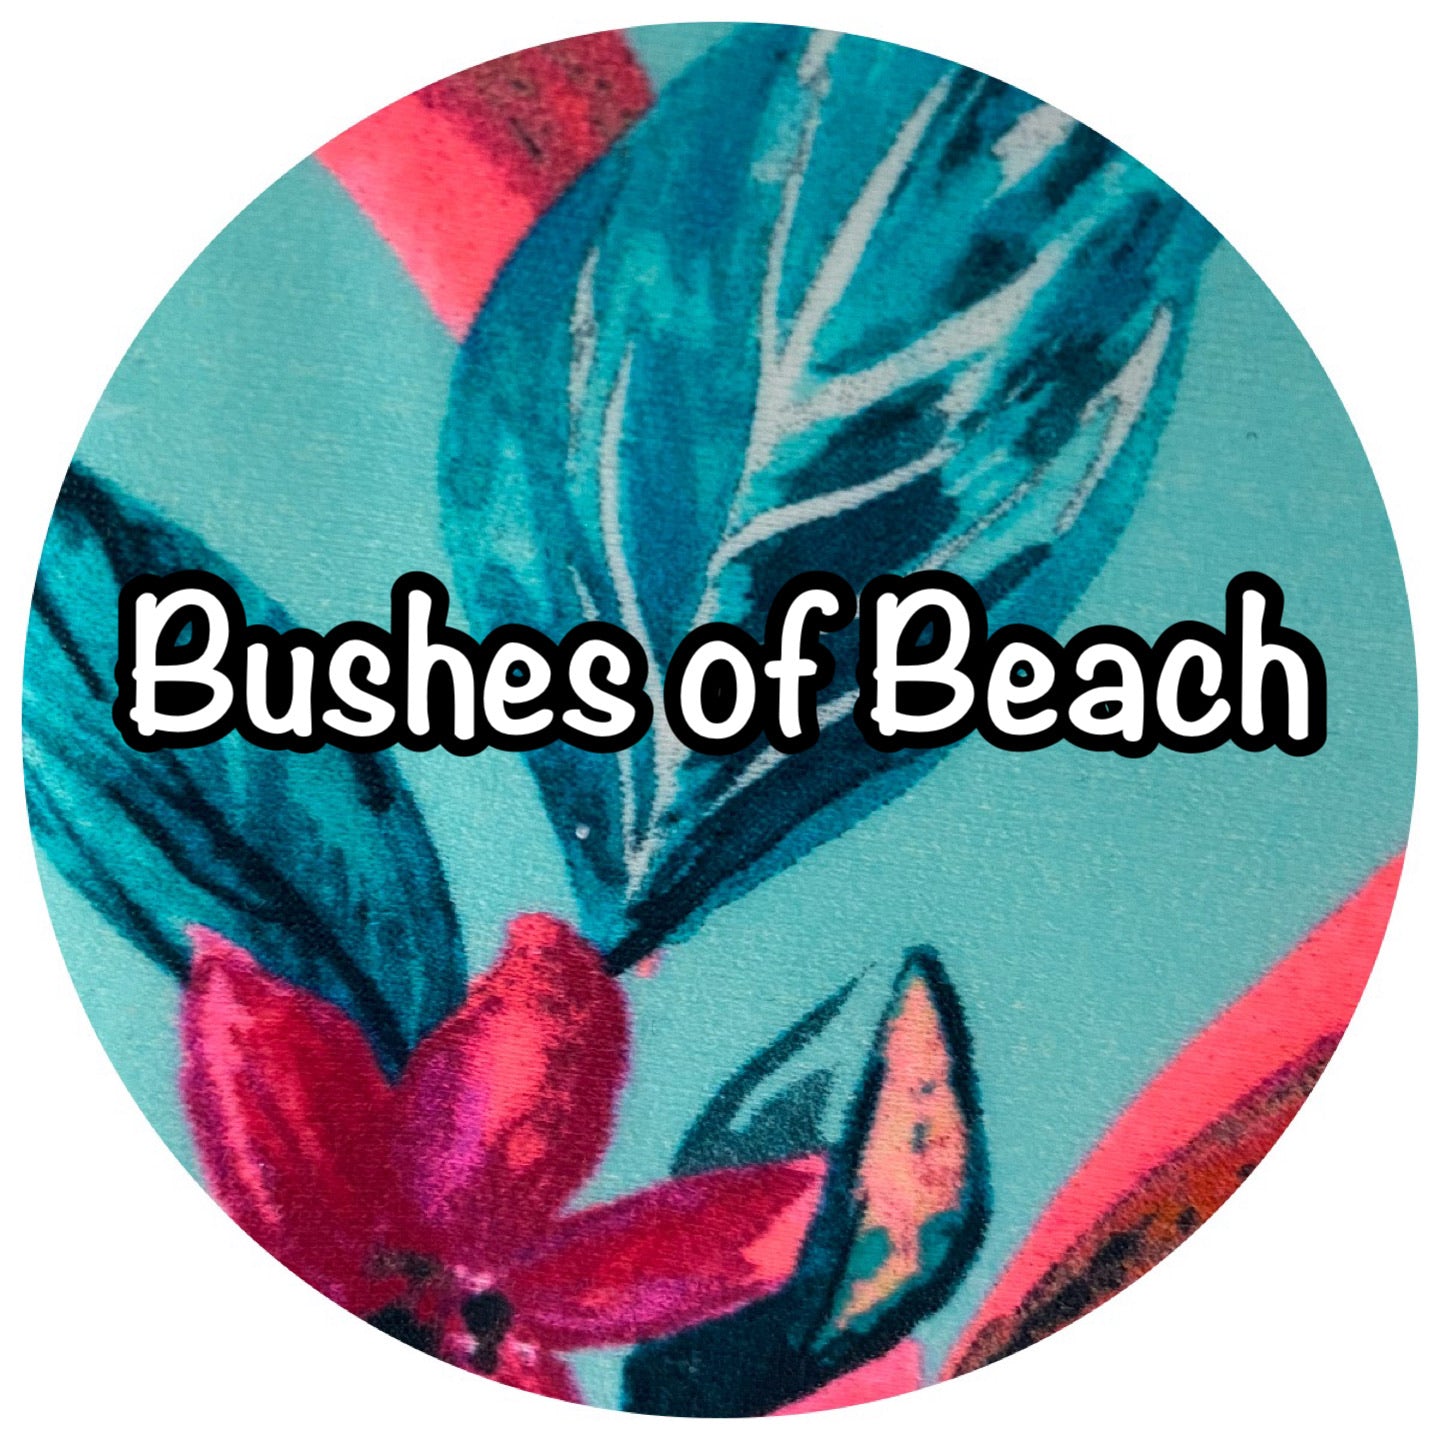 Bushes of Beach